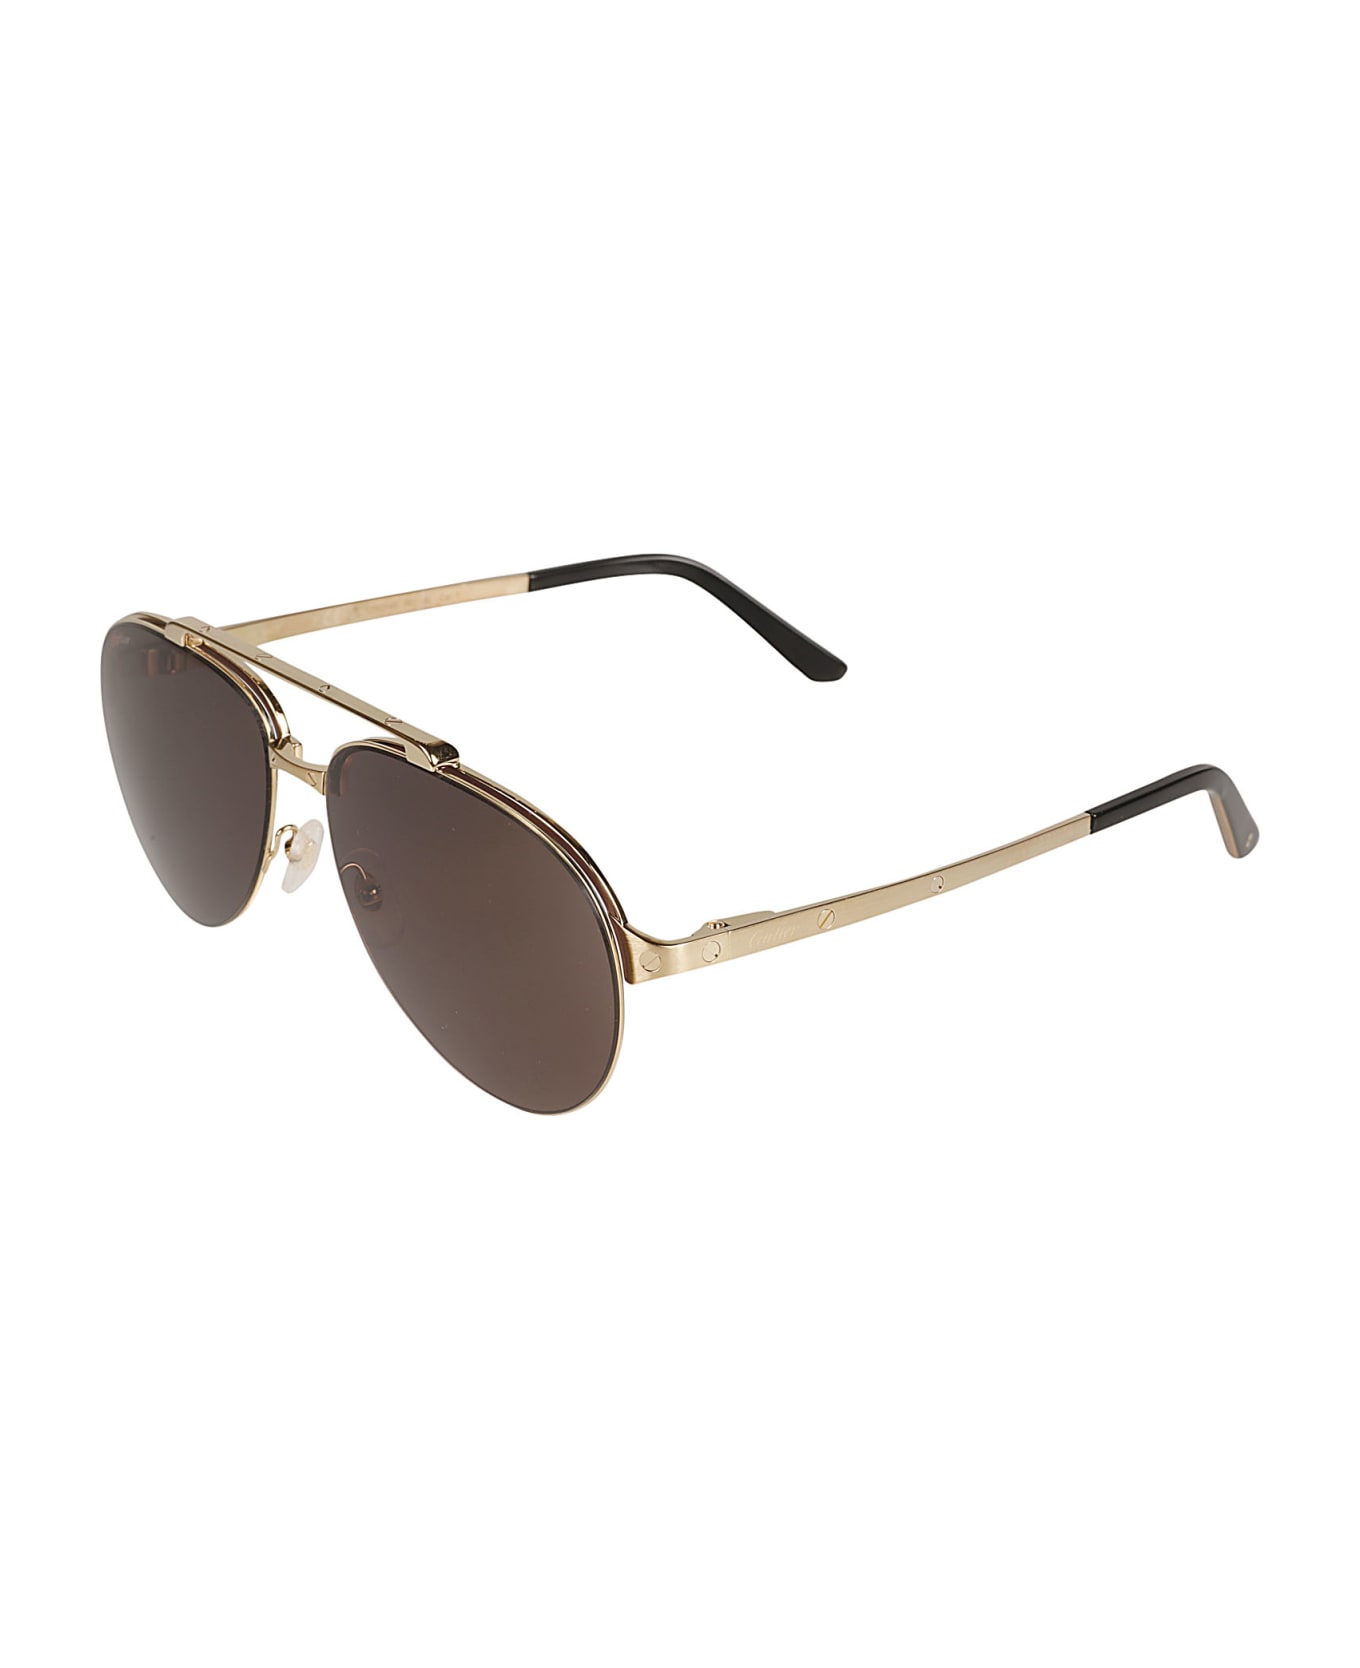 Cartier Eyewear Aviator Classic Sunglasses - Gold/Grey